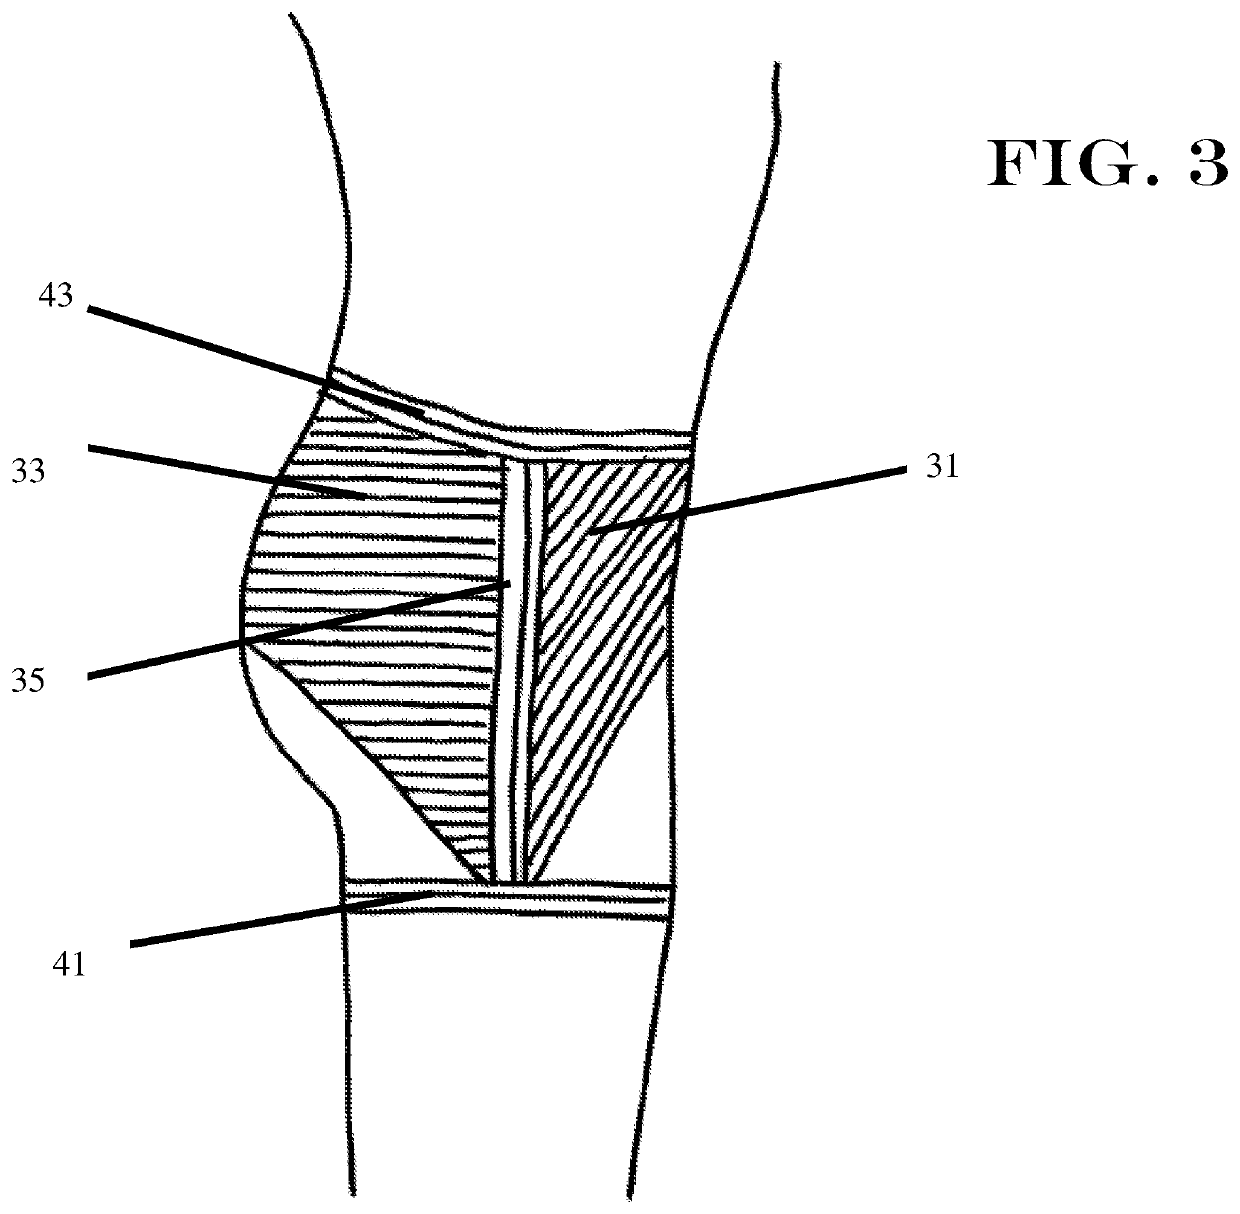 Gird compression hip tensioning garment